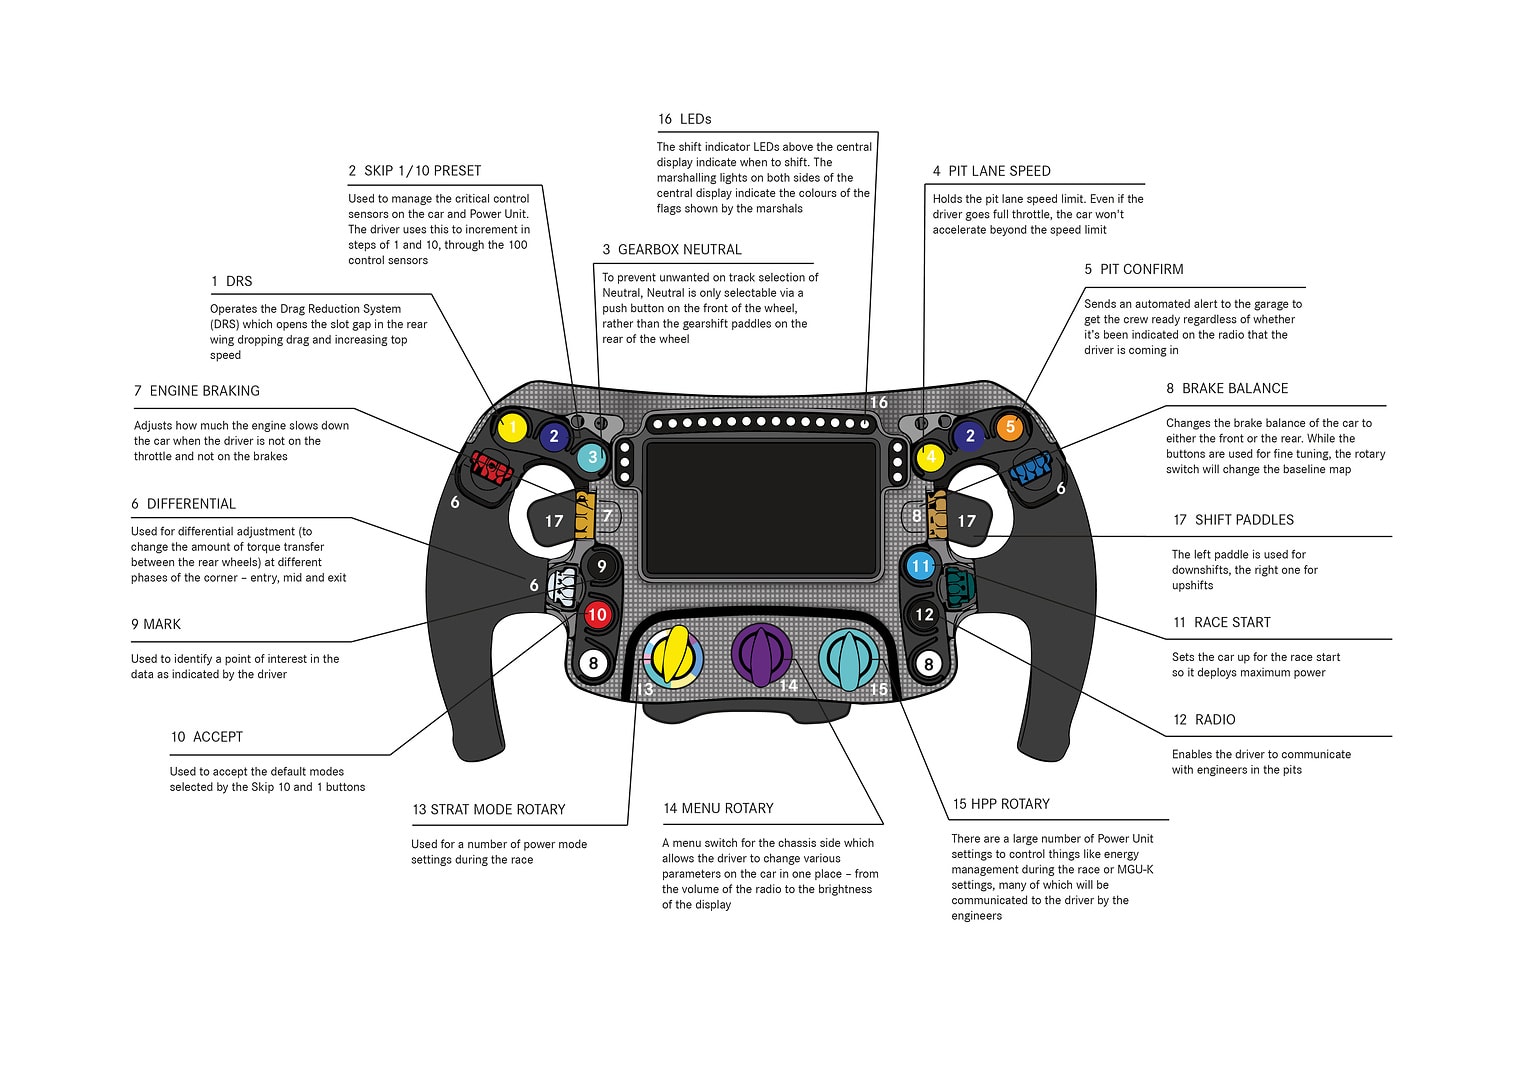 Formula 1 Steering Wheel Infographic